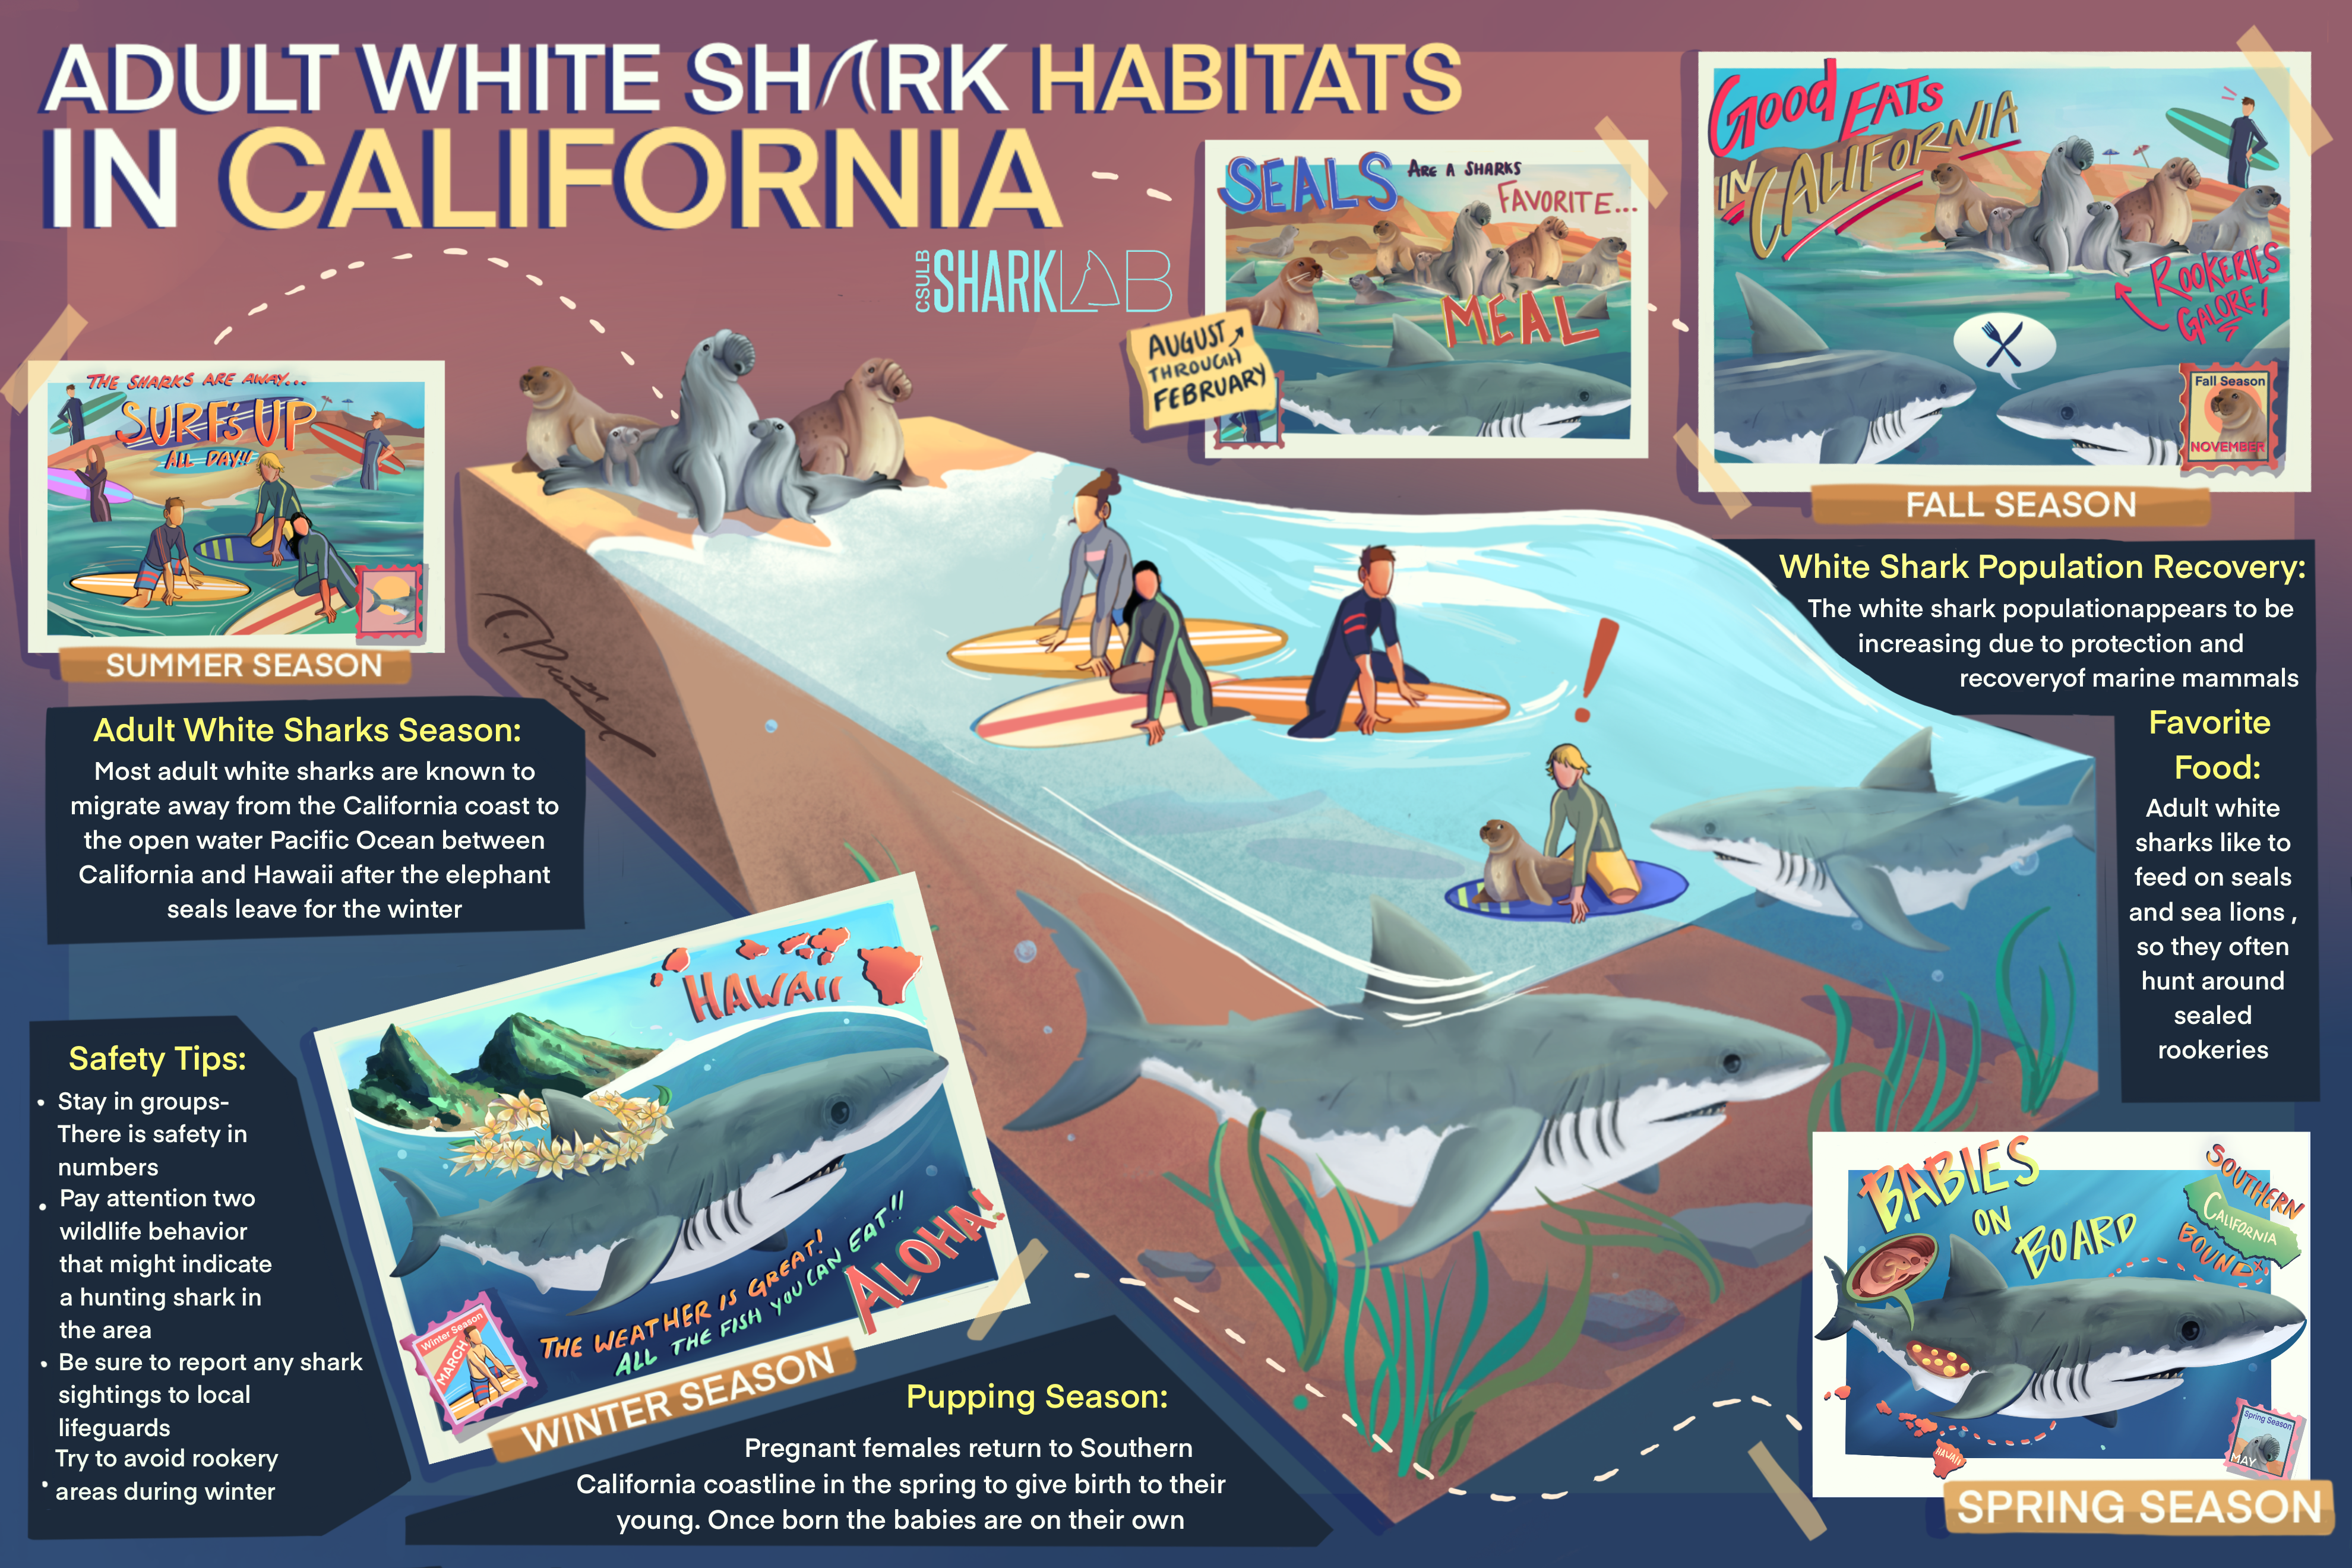 Adult White Shark Habitats in California